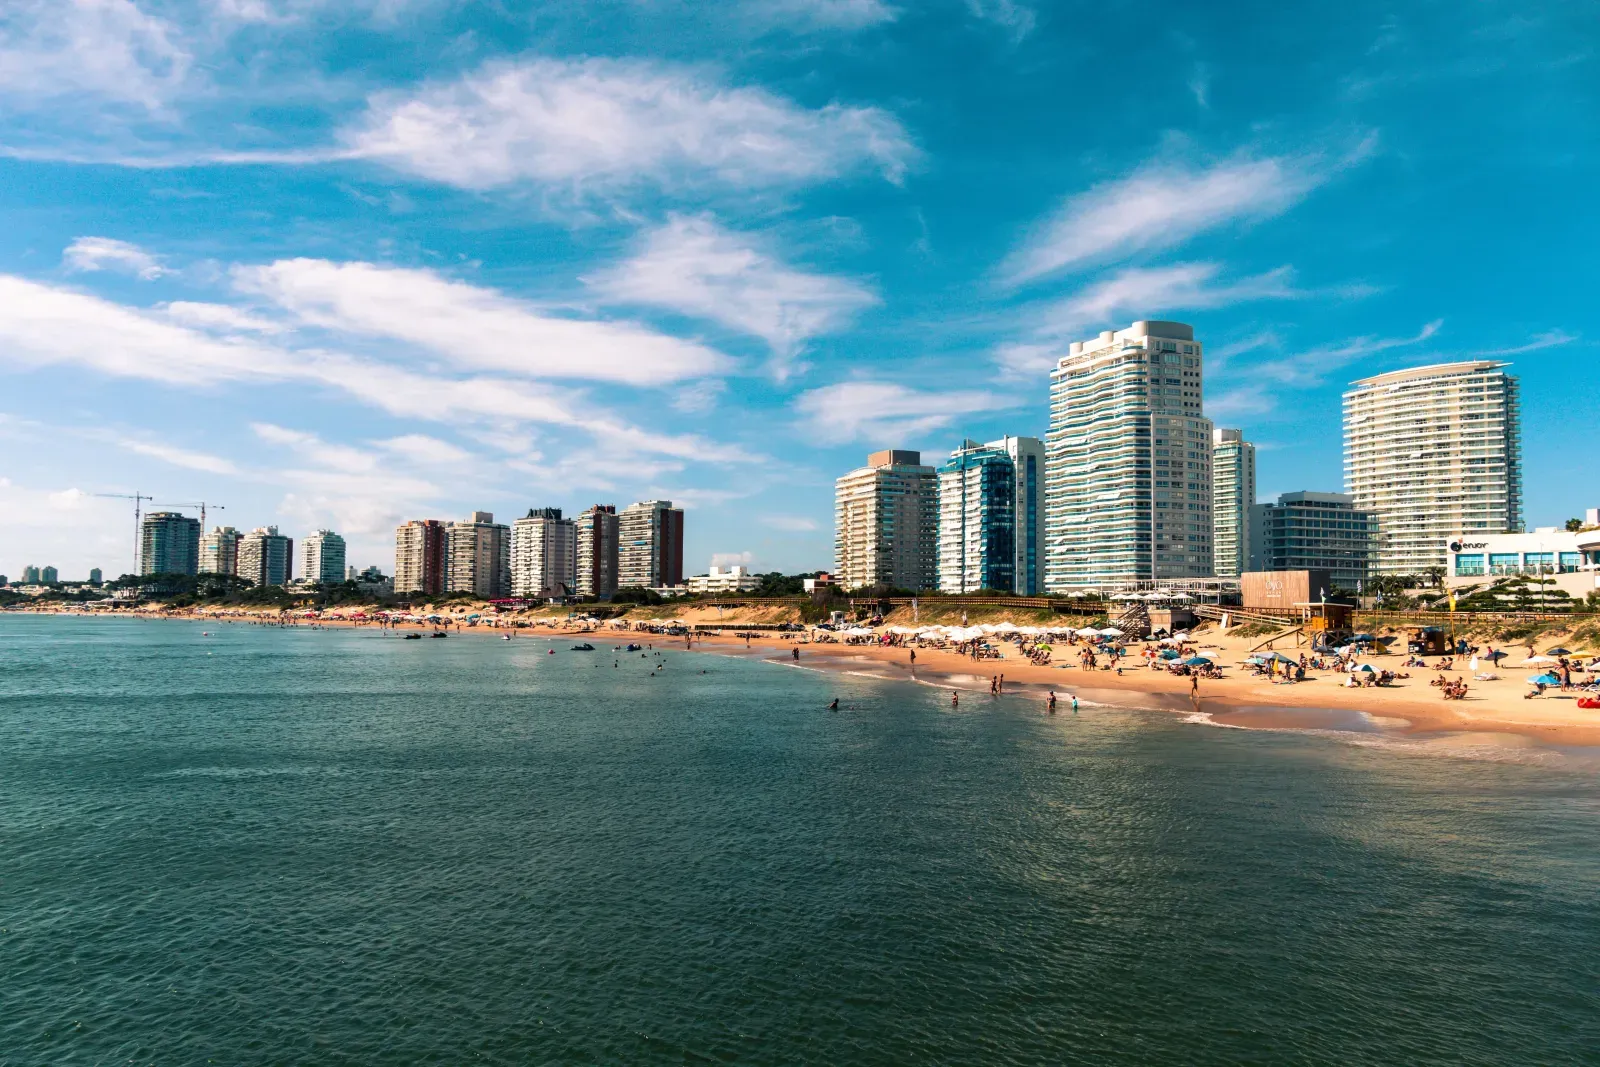 Immagine di una città uruguayana sul mare